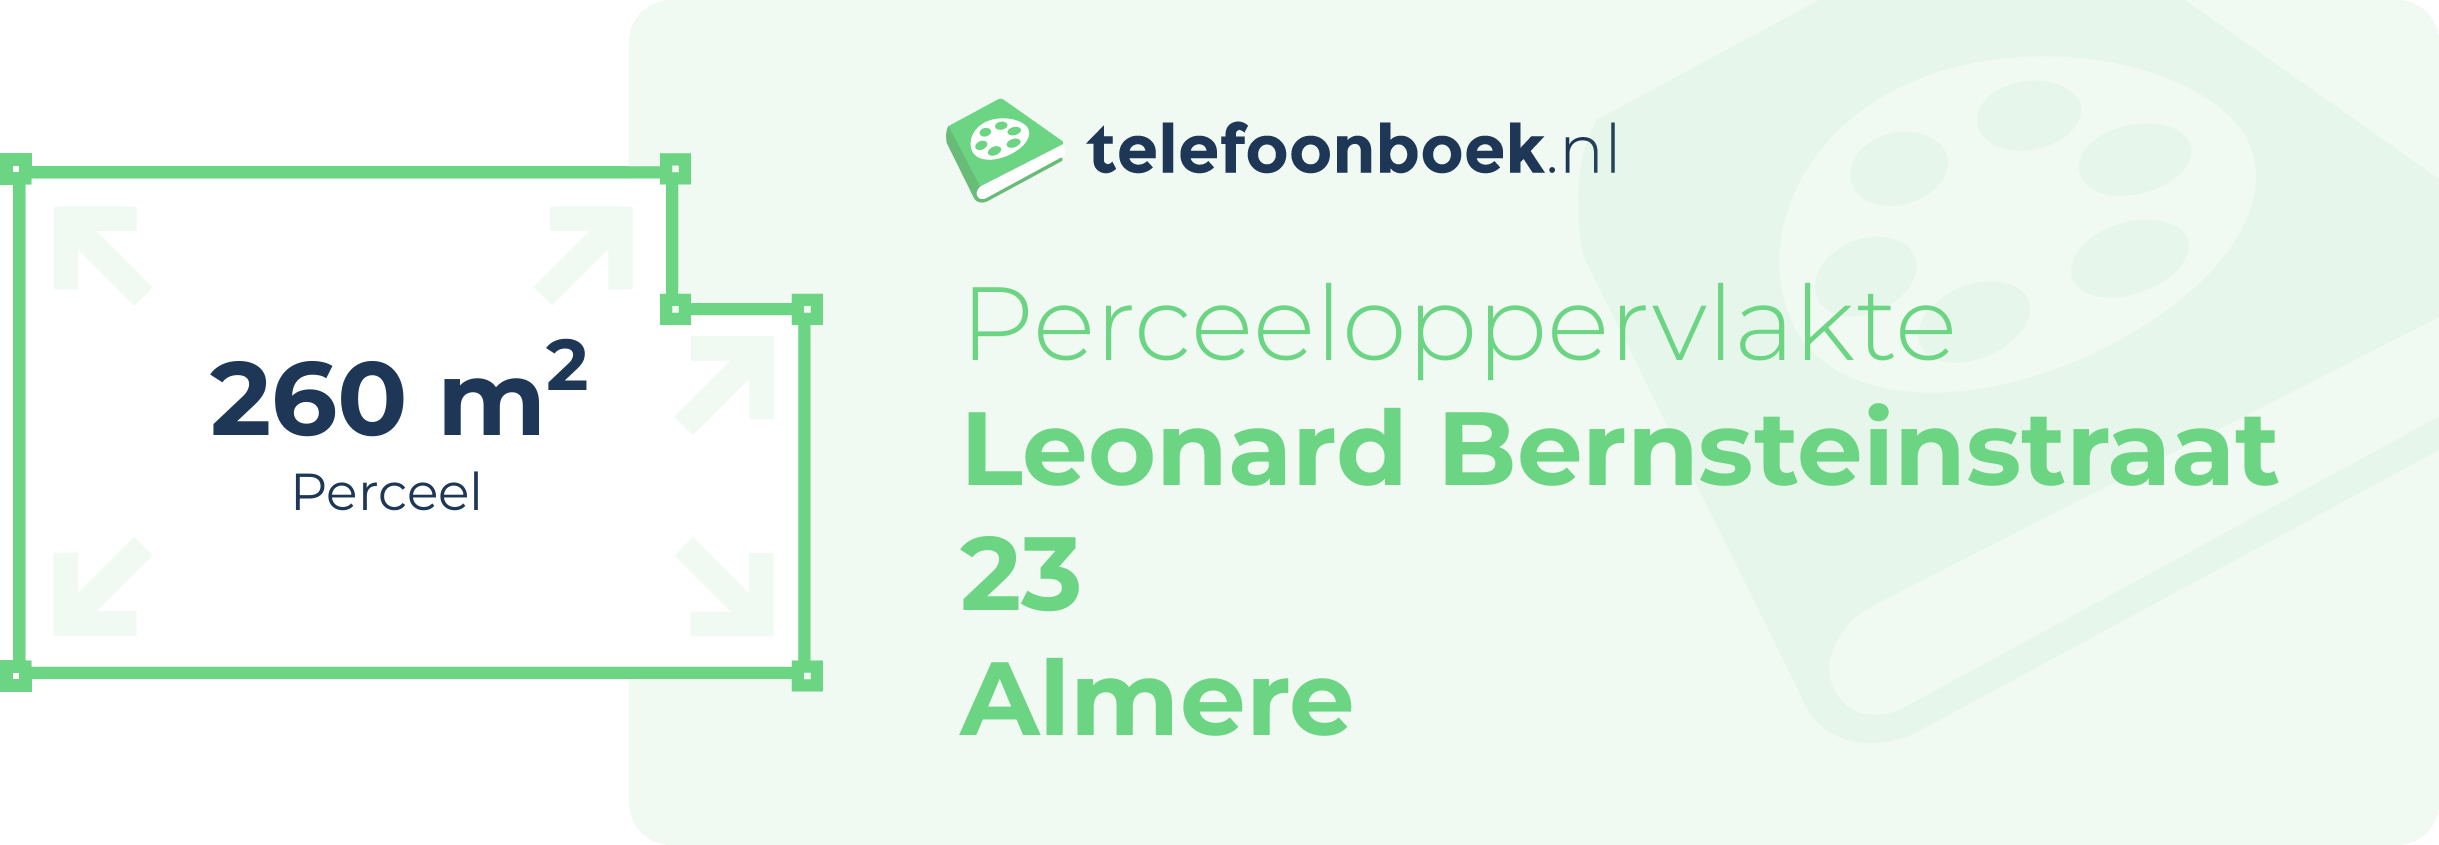 Perceeloppervlakte Leonard Bernsteinstraat 23 Almere